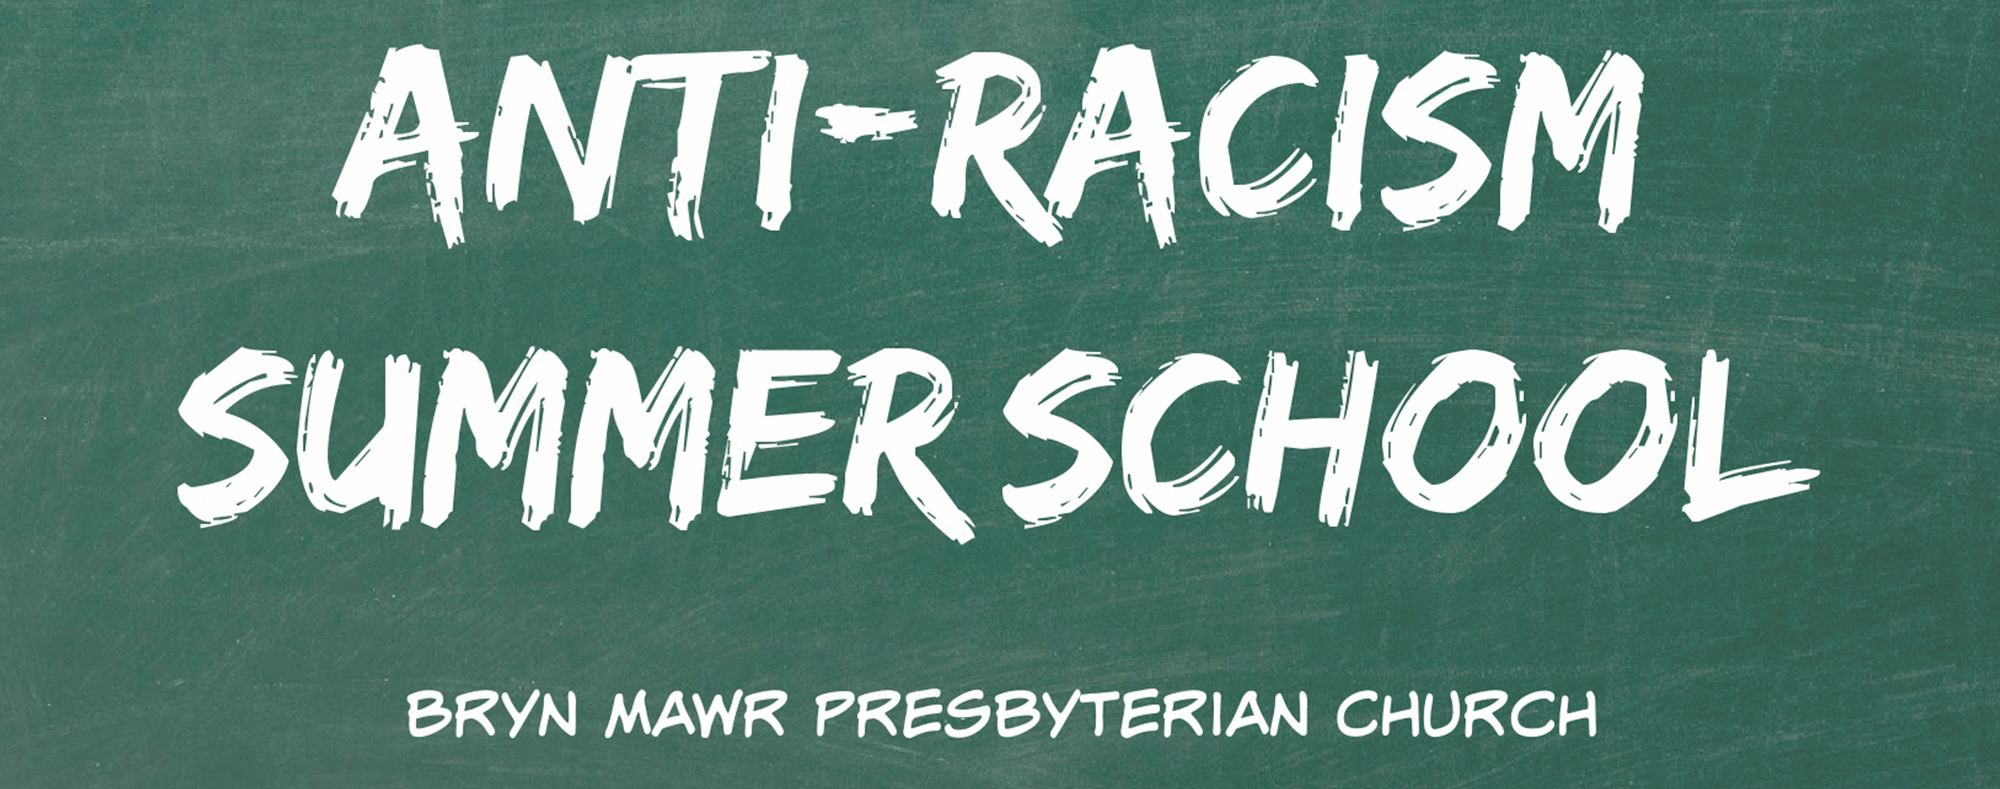 Anti-Racism Summer School